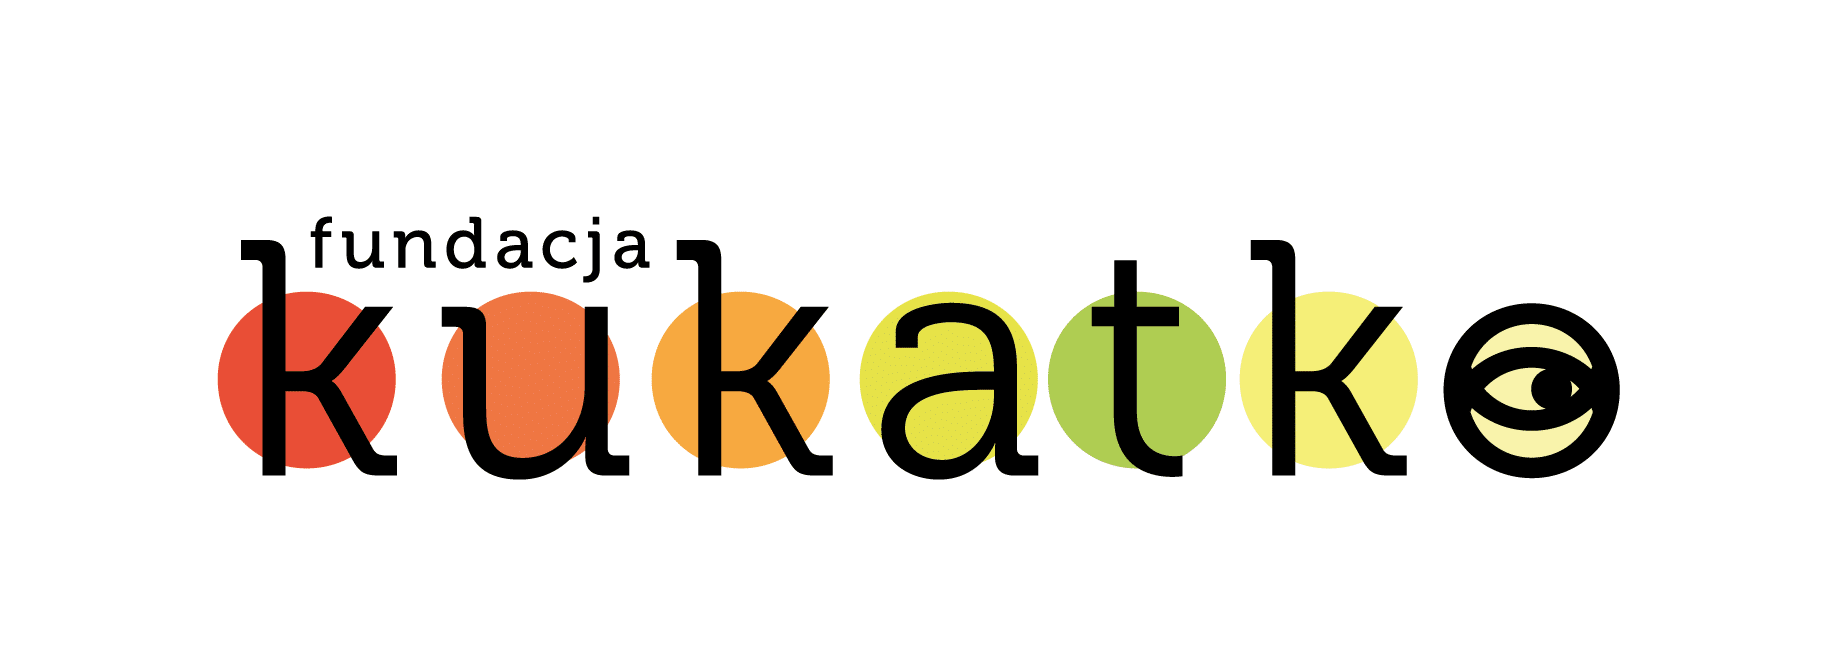 Logotyp fundacji Kukatko